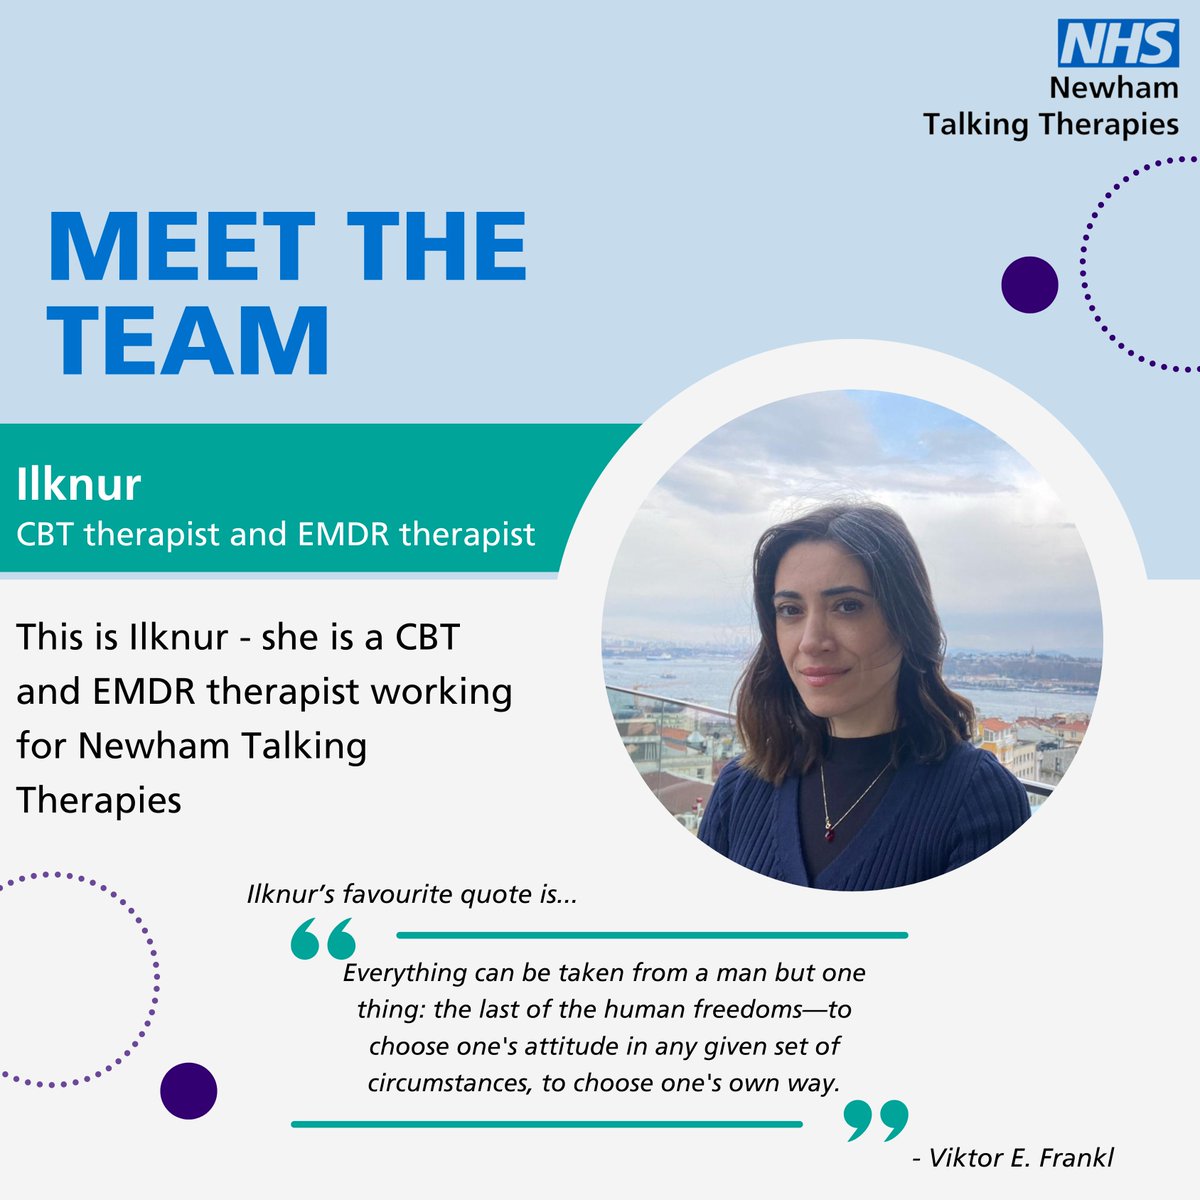 For today's motivational/meet the team Monday meet Ilknur!

#NHS #NTT #Newhamtalkingtherapies
#talkingtherapies #nhstalkingtherapies #meettheteam
#meettheteammonday✨